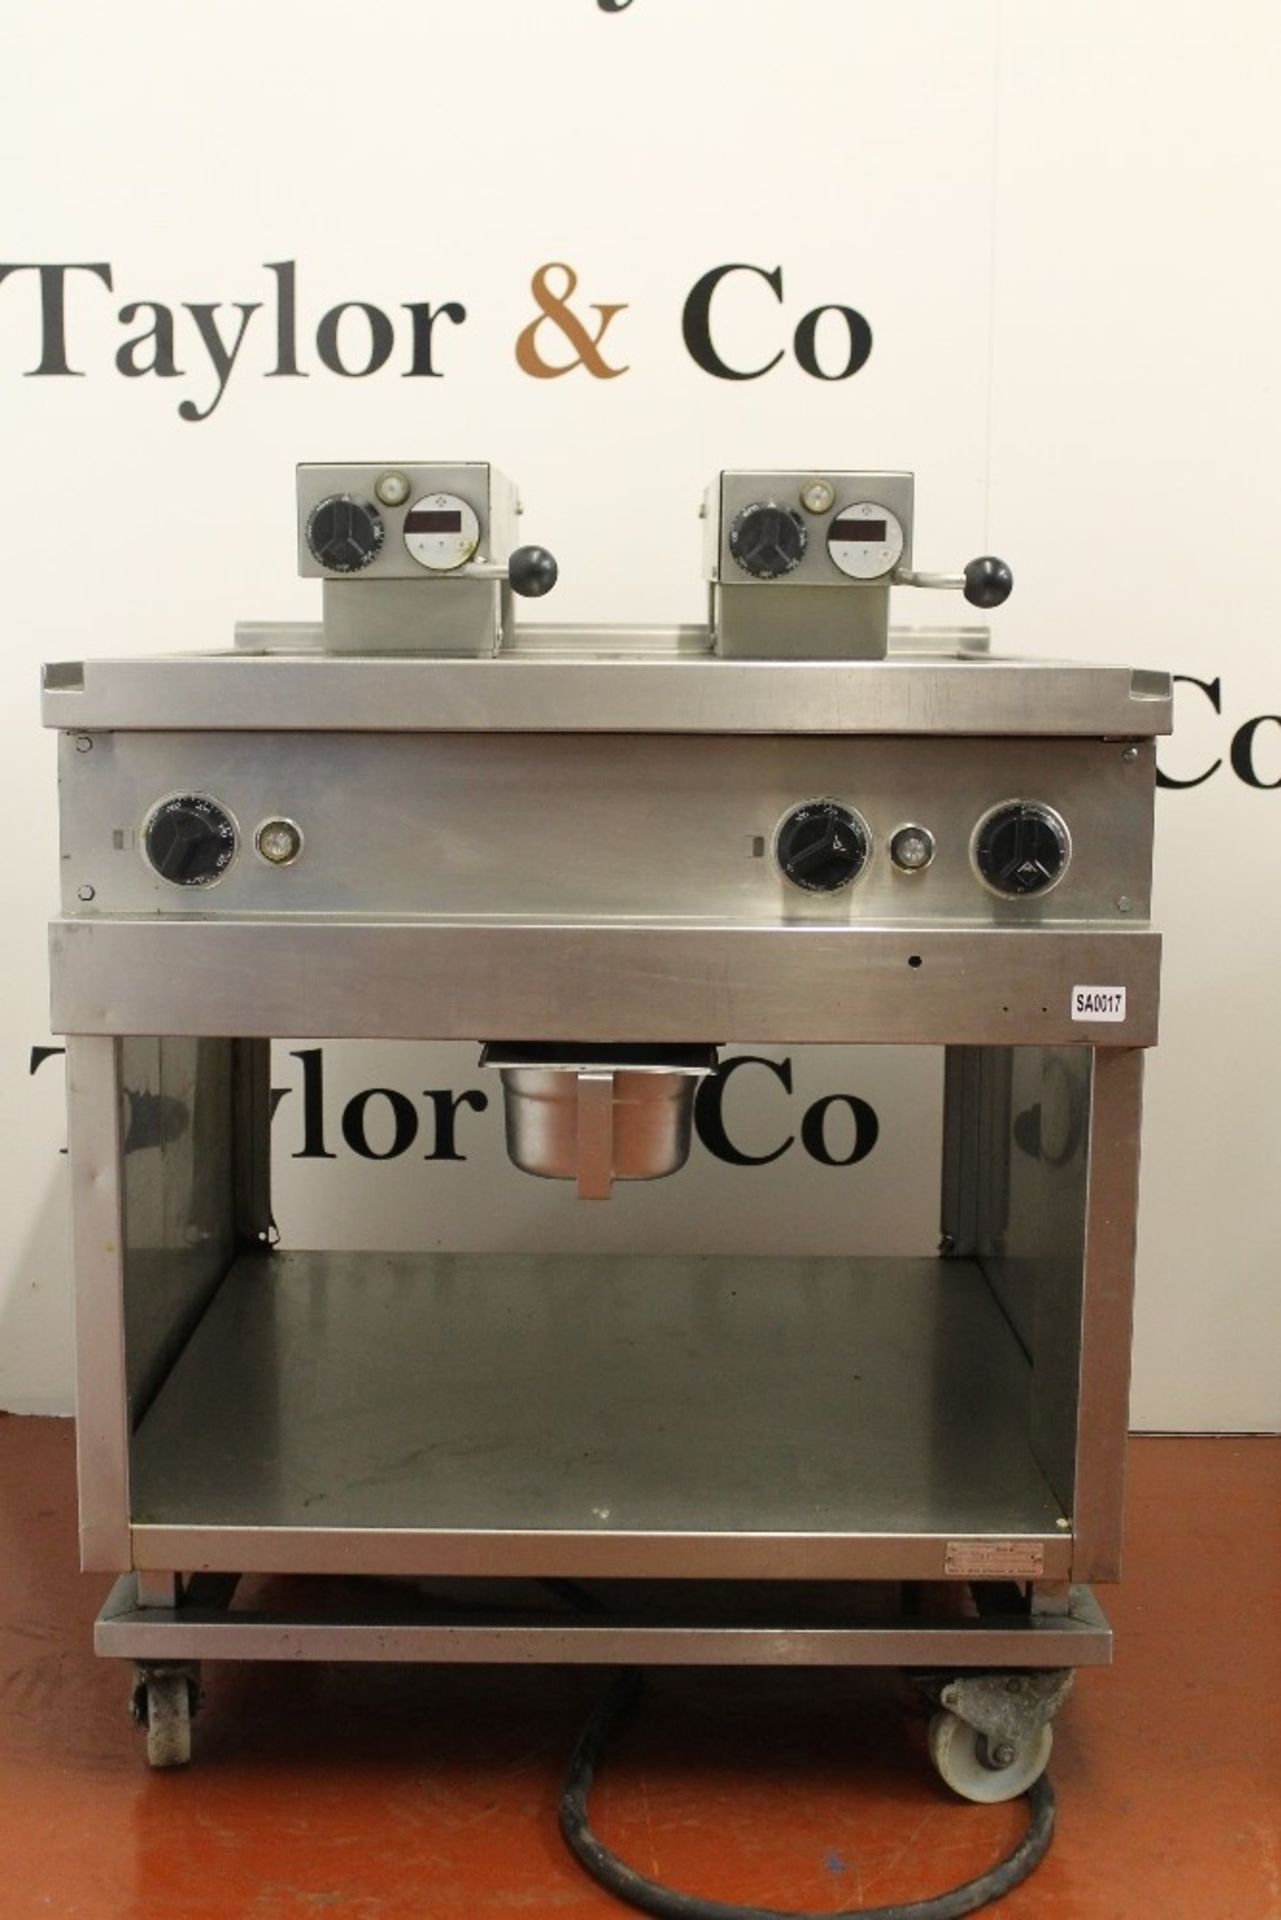 Large Griddle / Hot Plate with 2 x Pressure Plates Model 005601 – 1 support leg missing -NO VAT